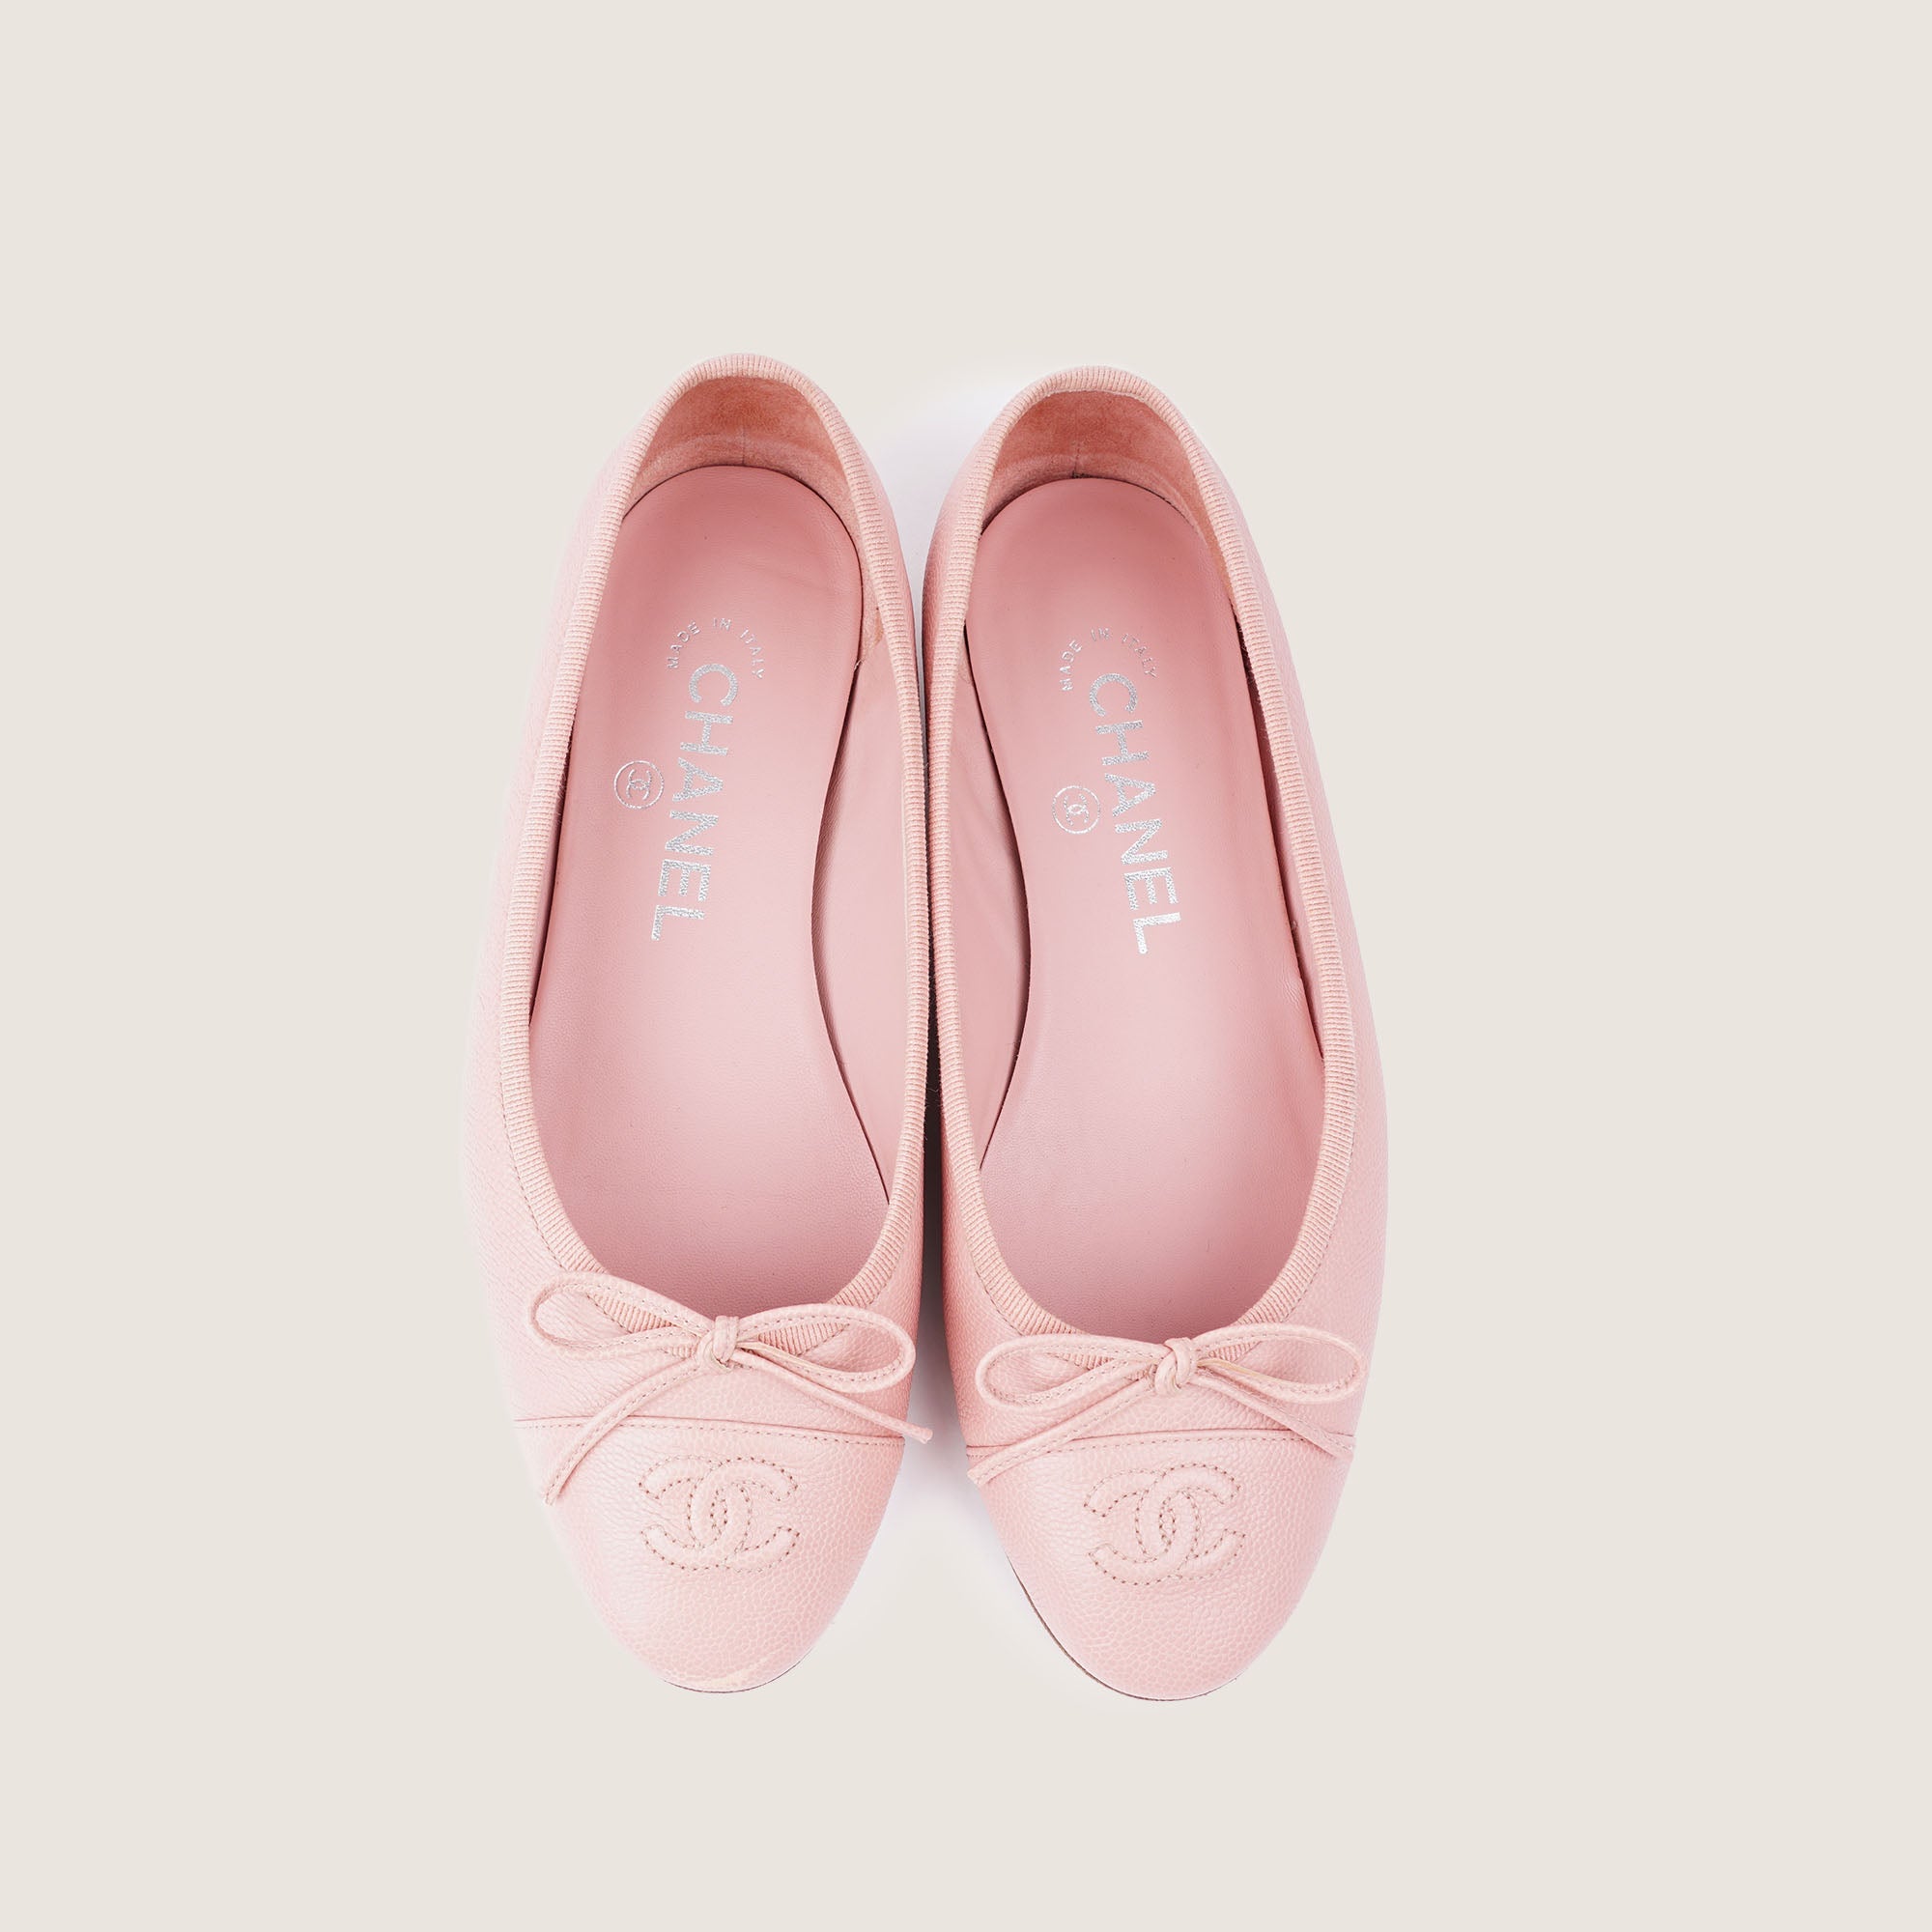 CC Ballerina Flats - CHANEL - Affordable Luxury